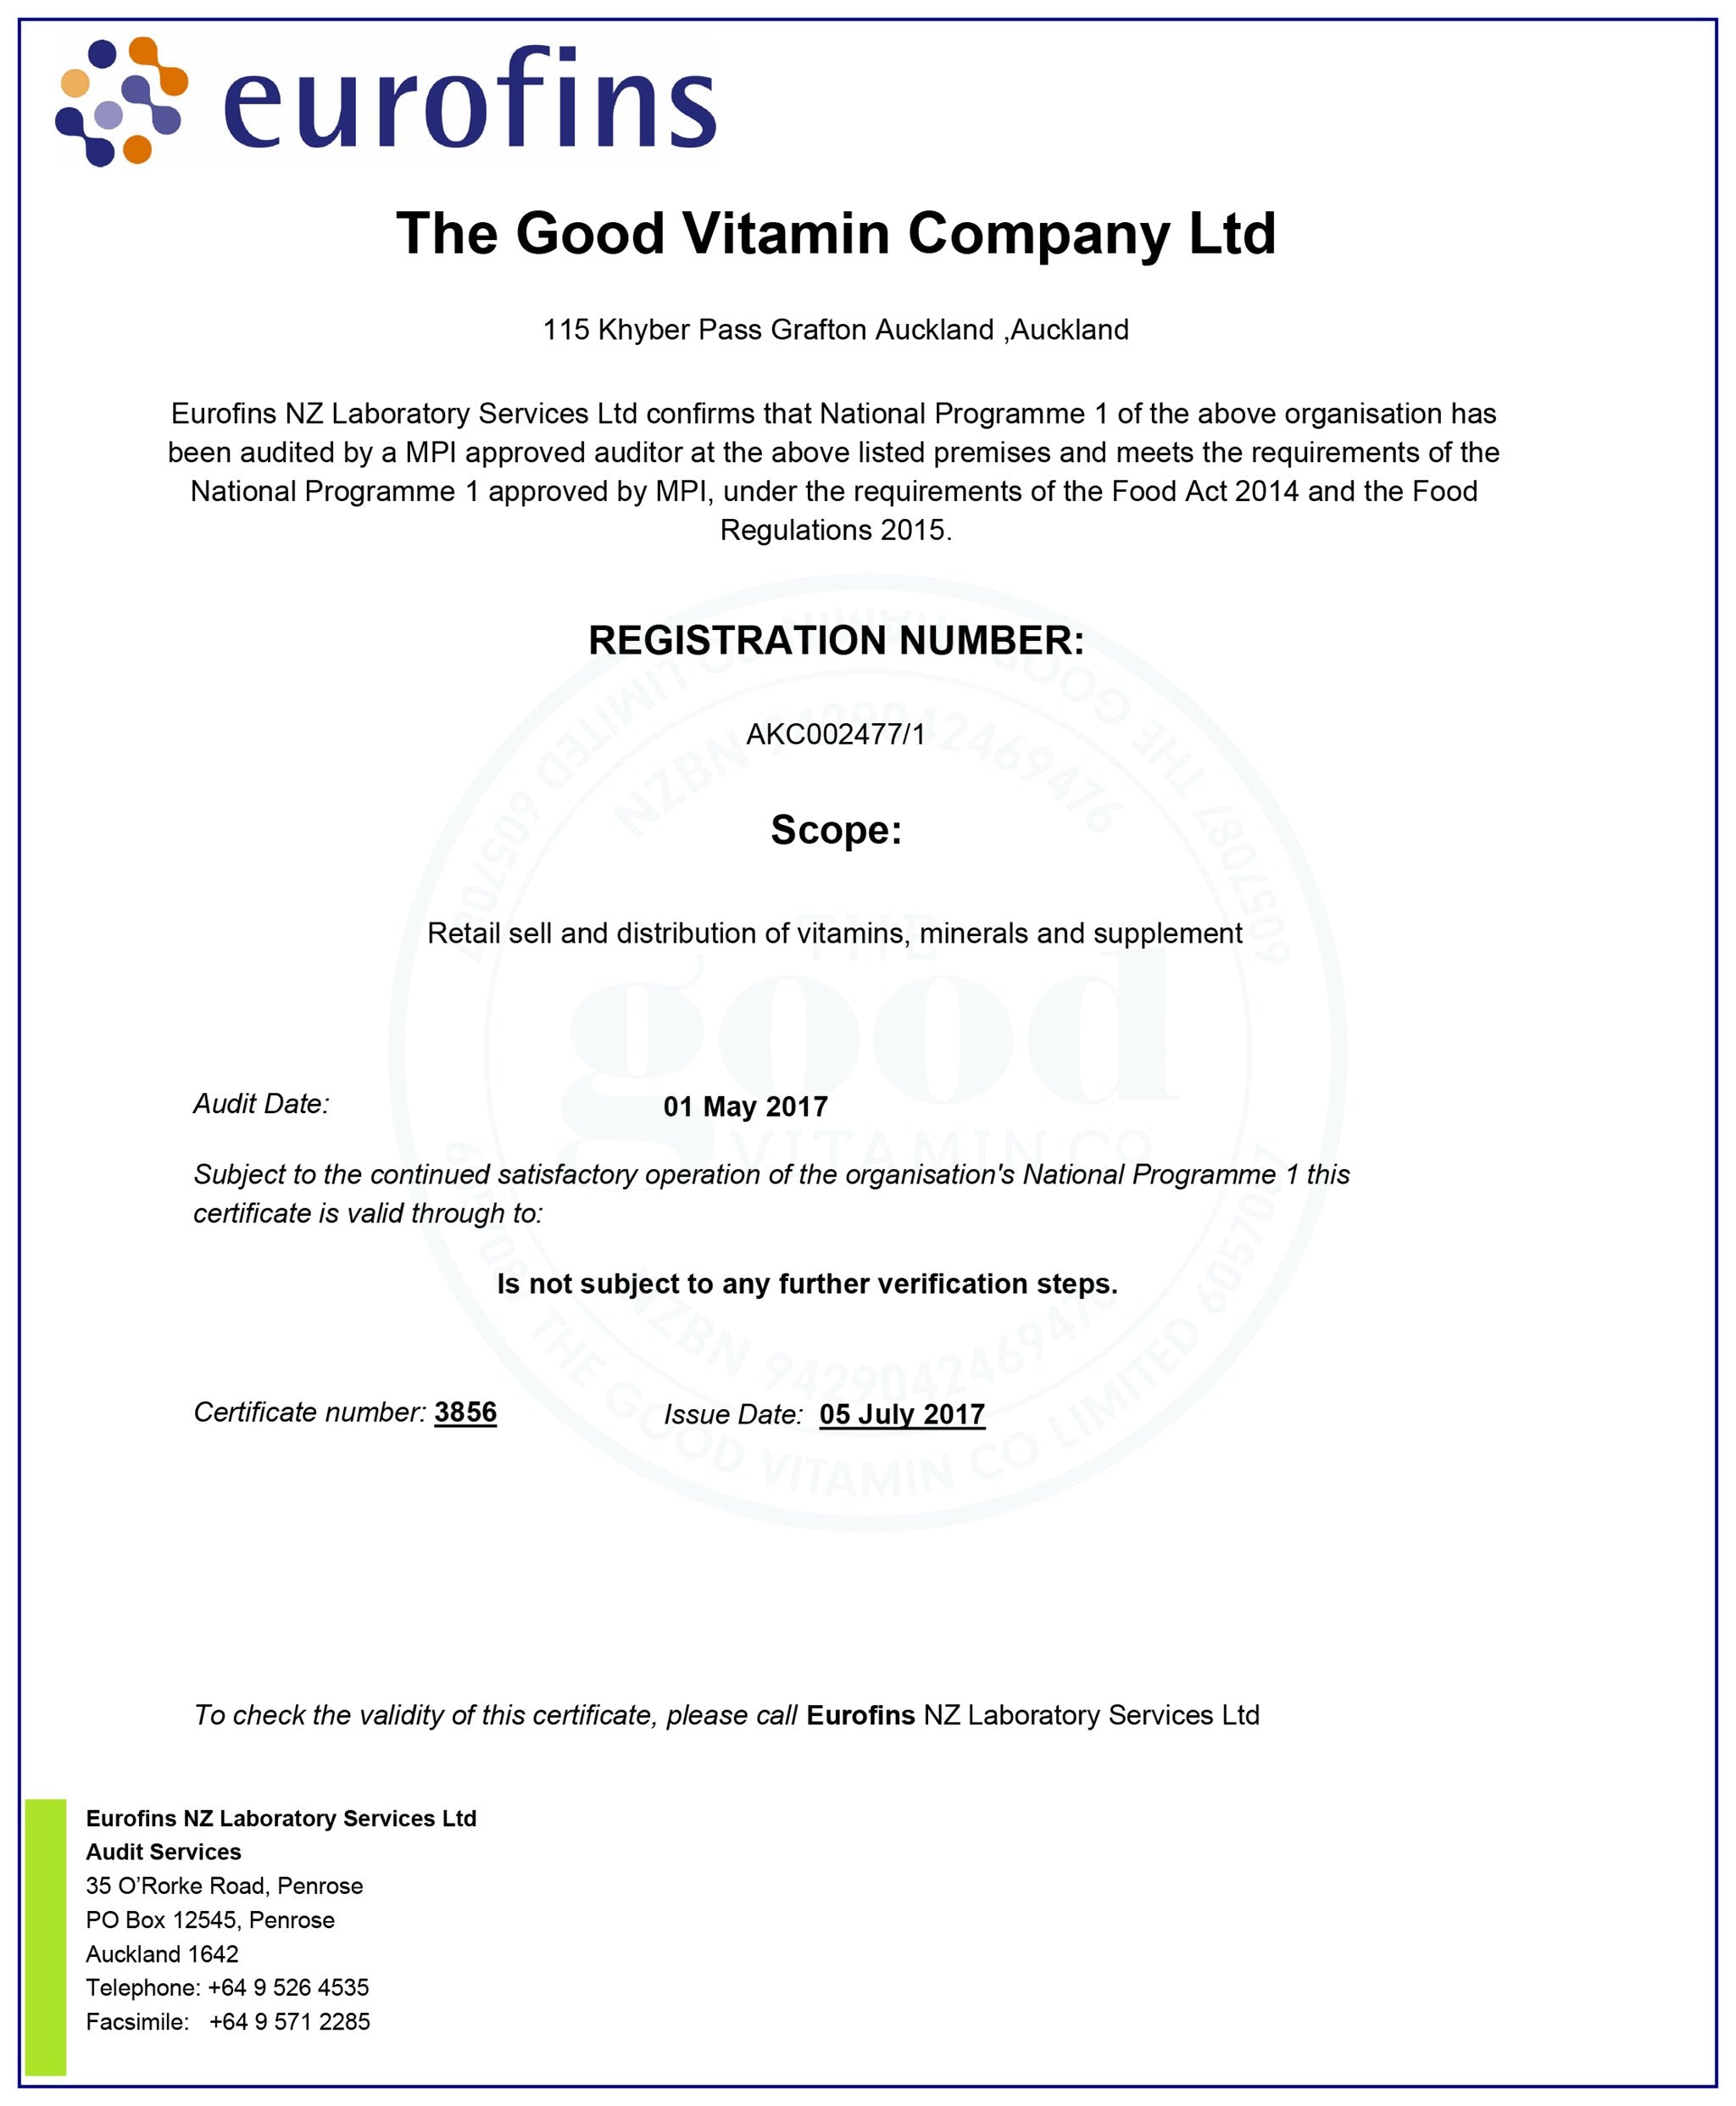 The Good Vitamin Co. Eurofins Audit Certificate 2017